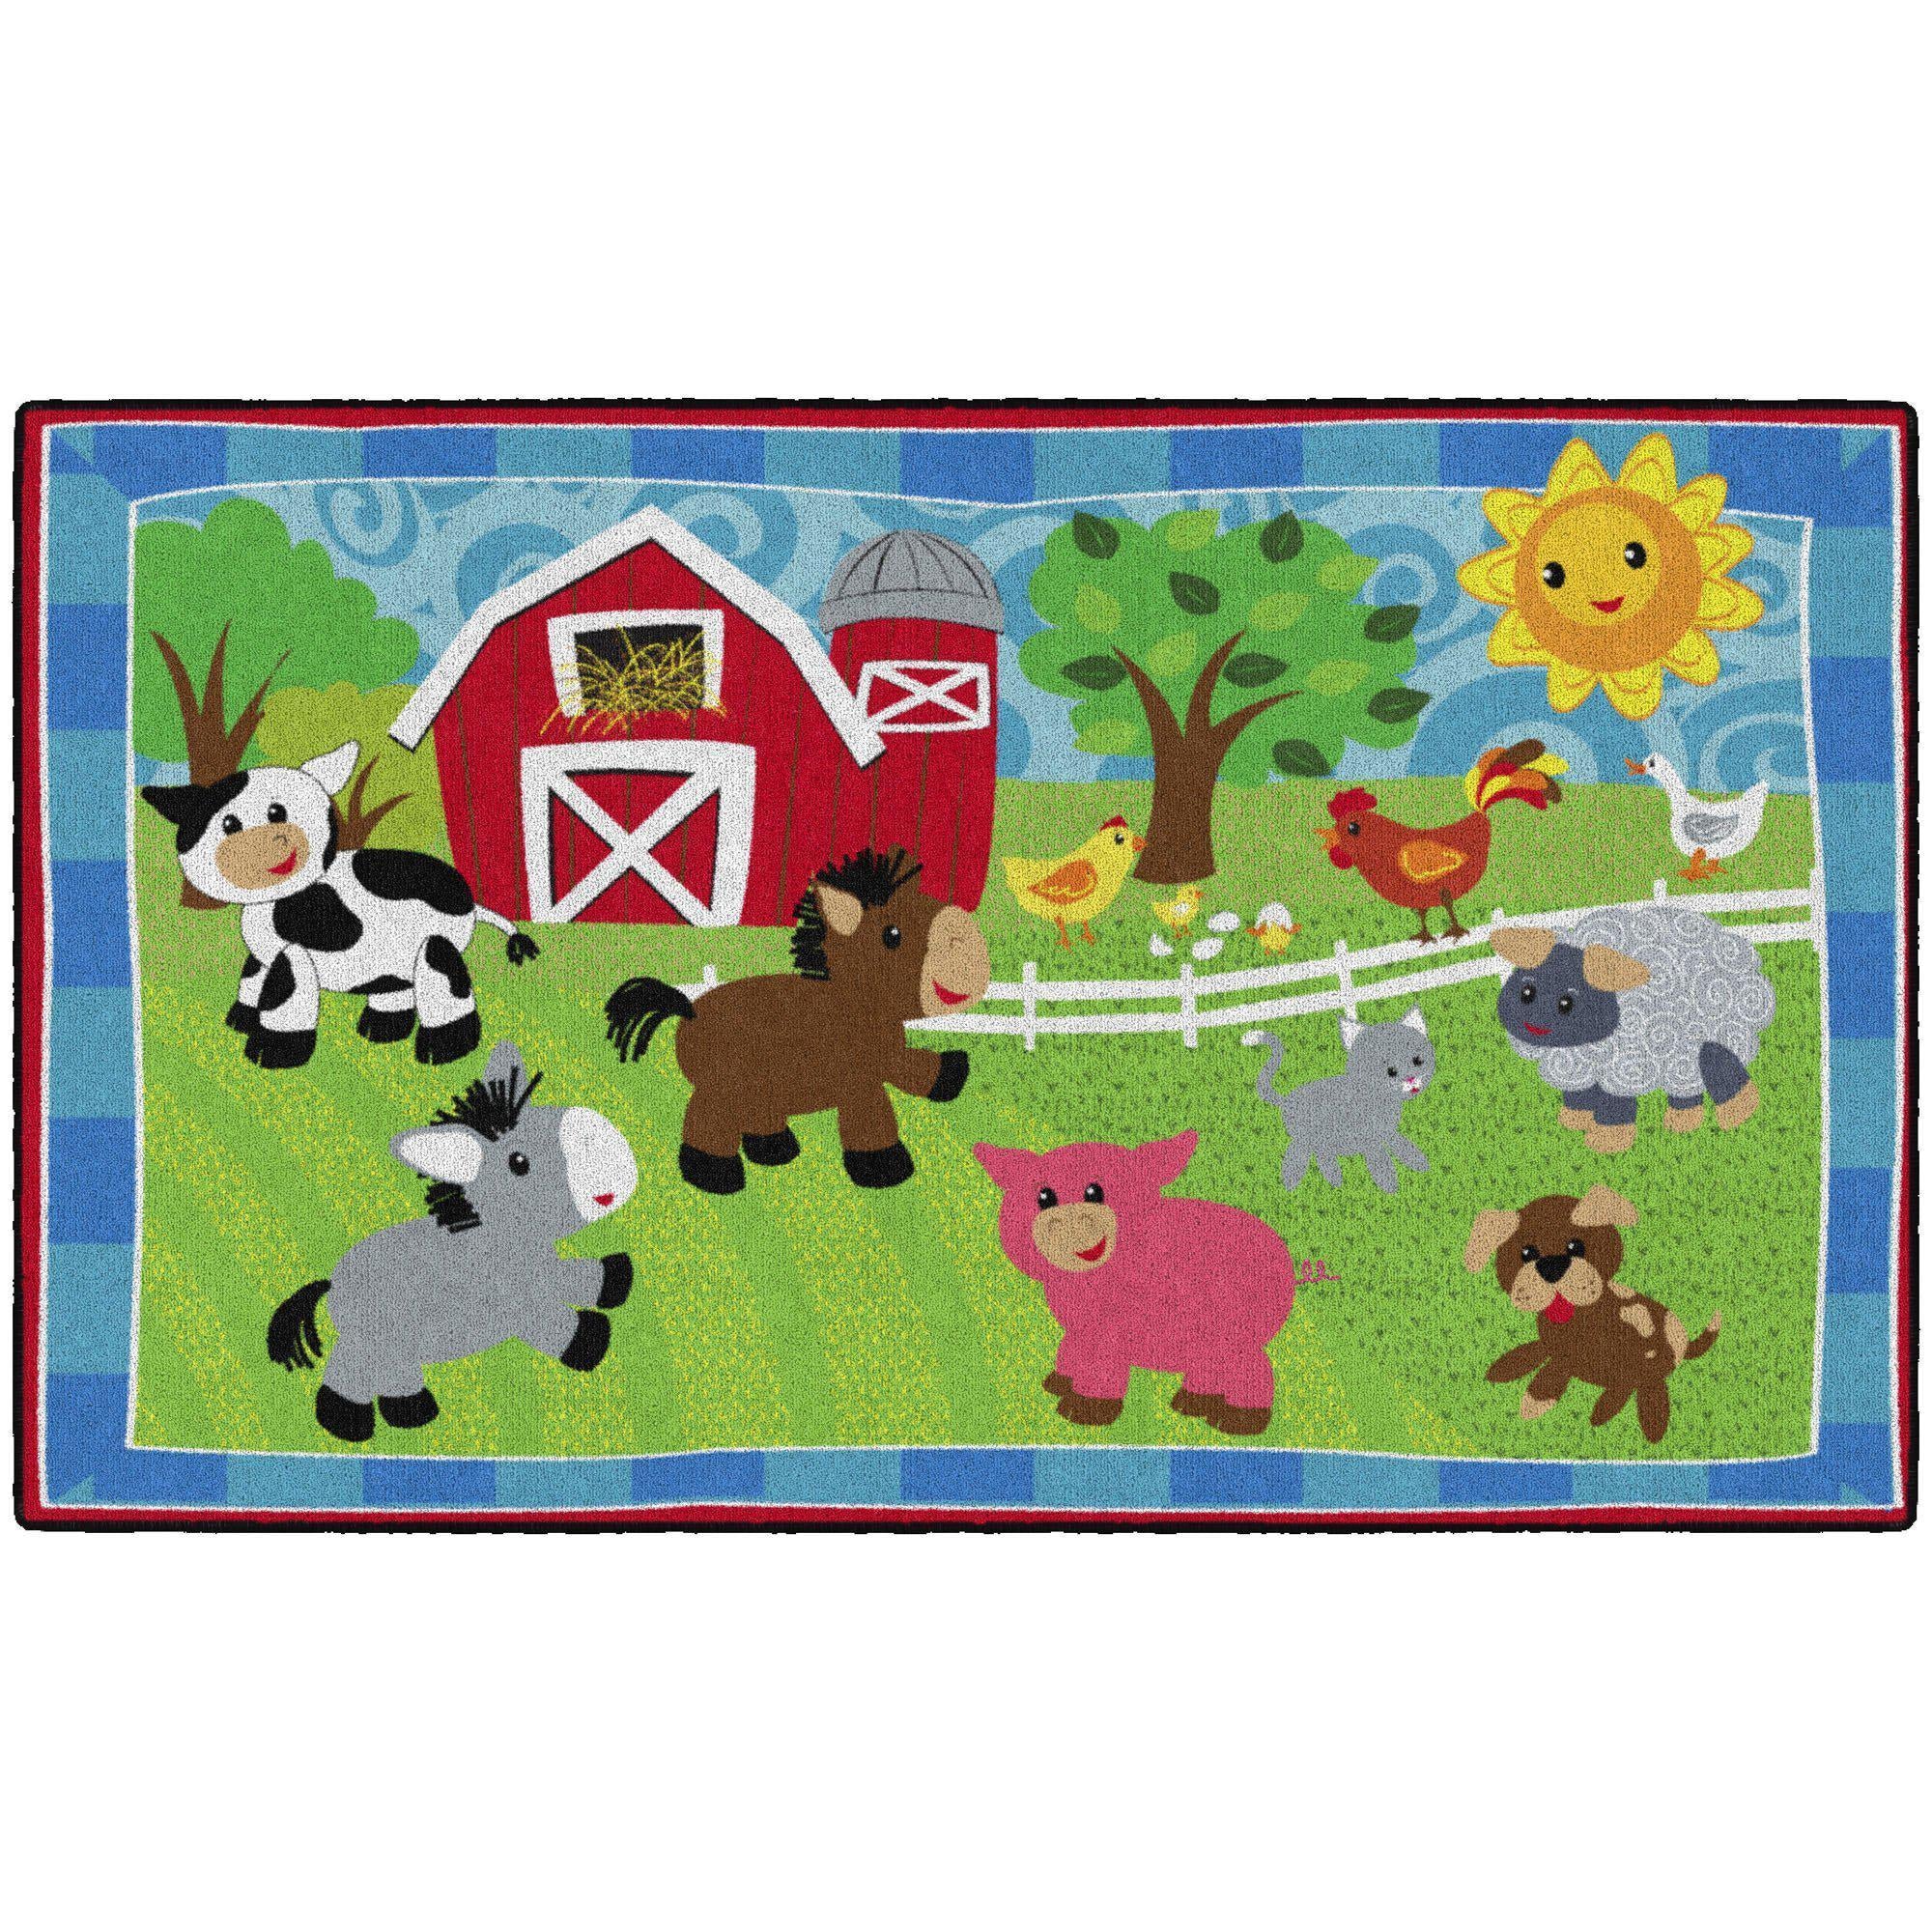 Cutie Nursery School Rugs-Classroom Rugs & Carpets-Barnyard-3' x 5'-